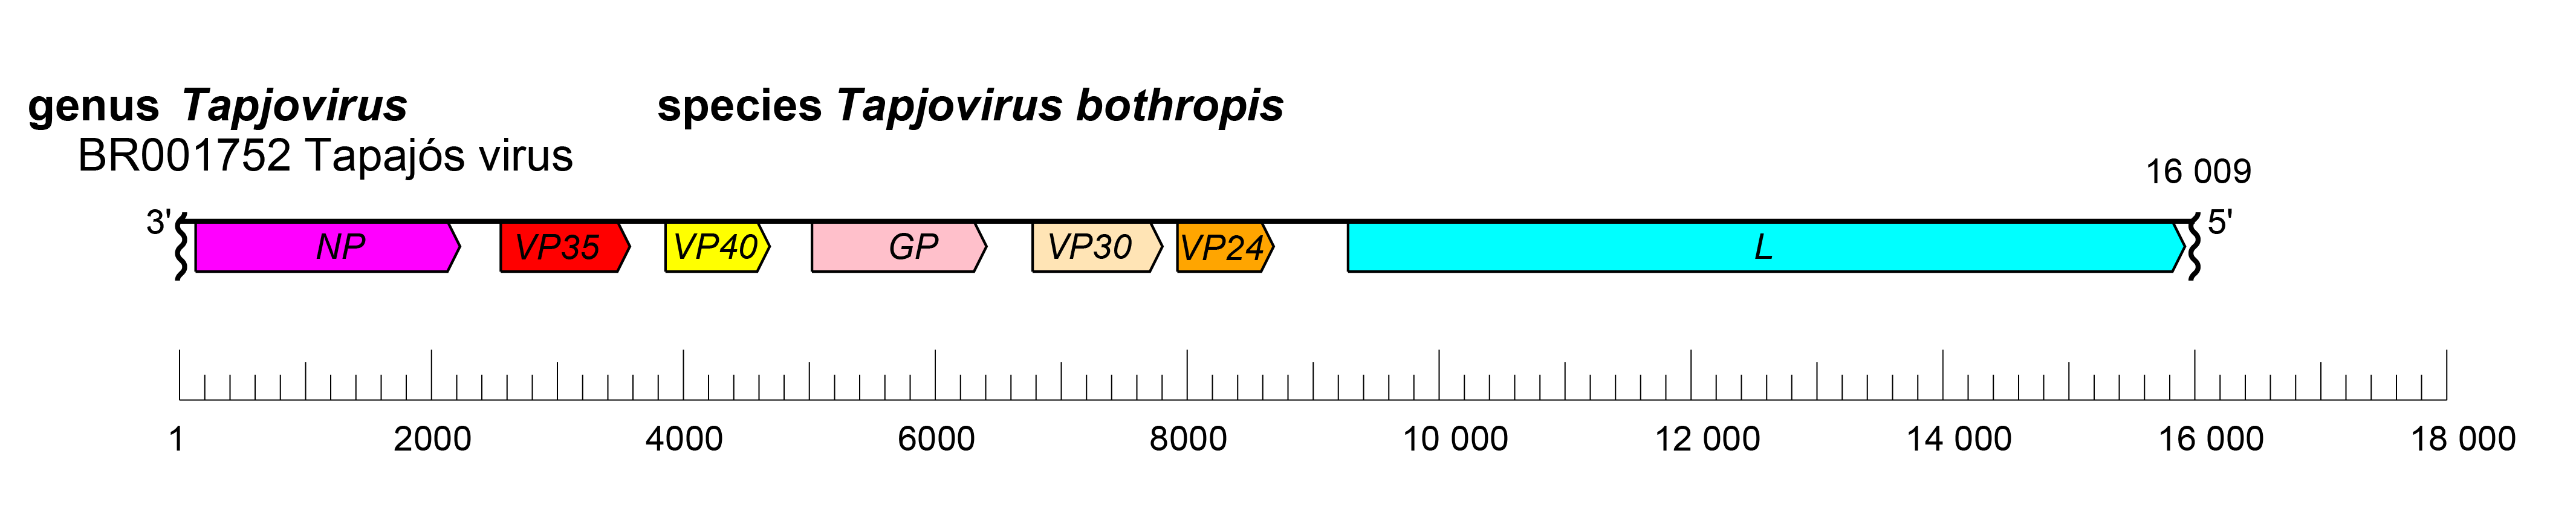 Tapjovirus genome